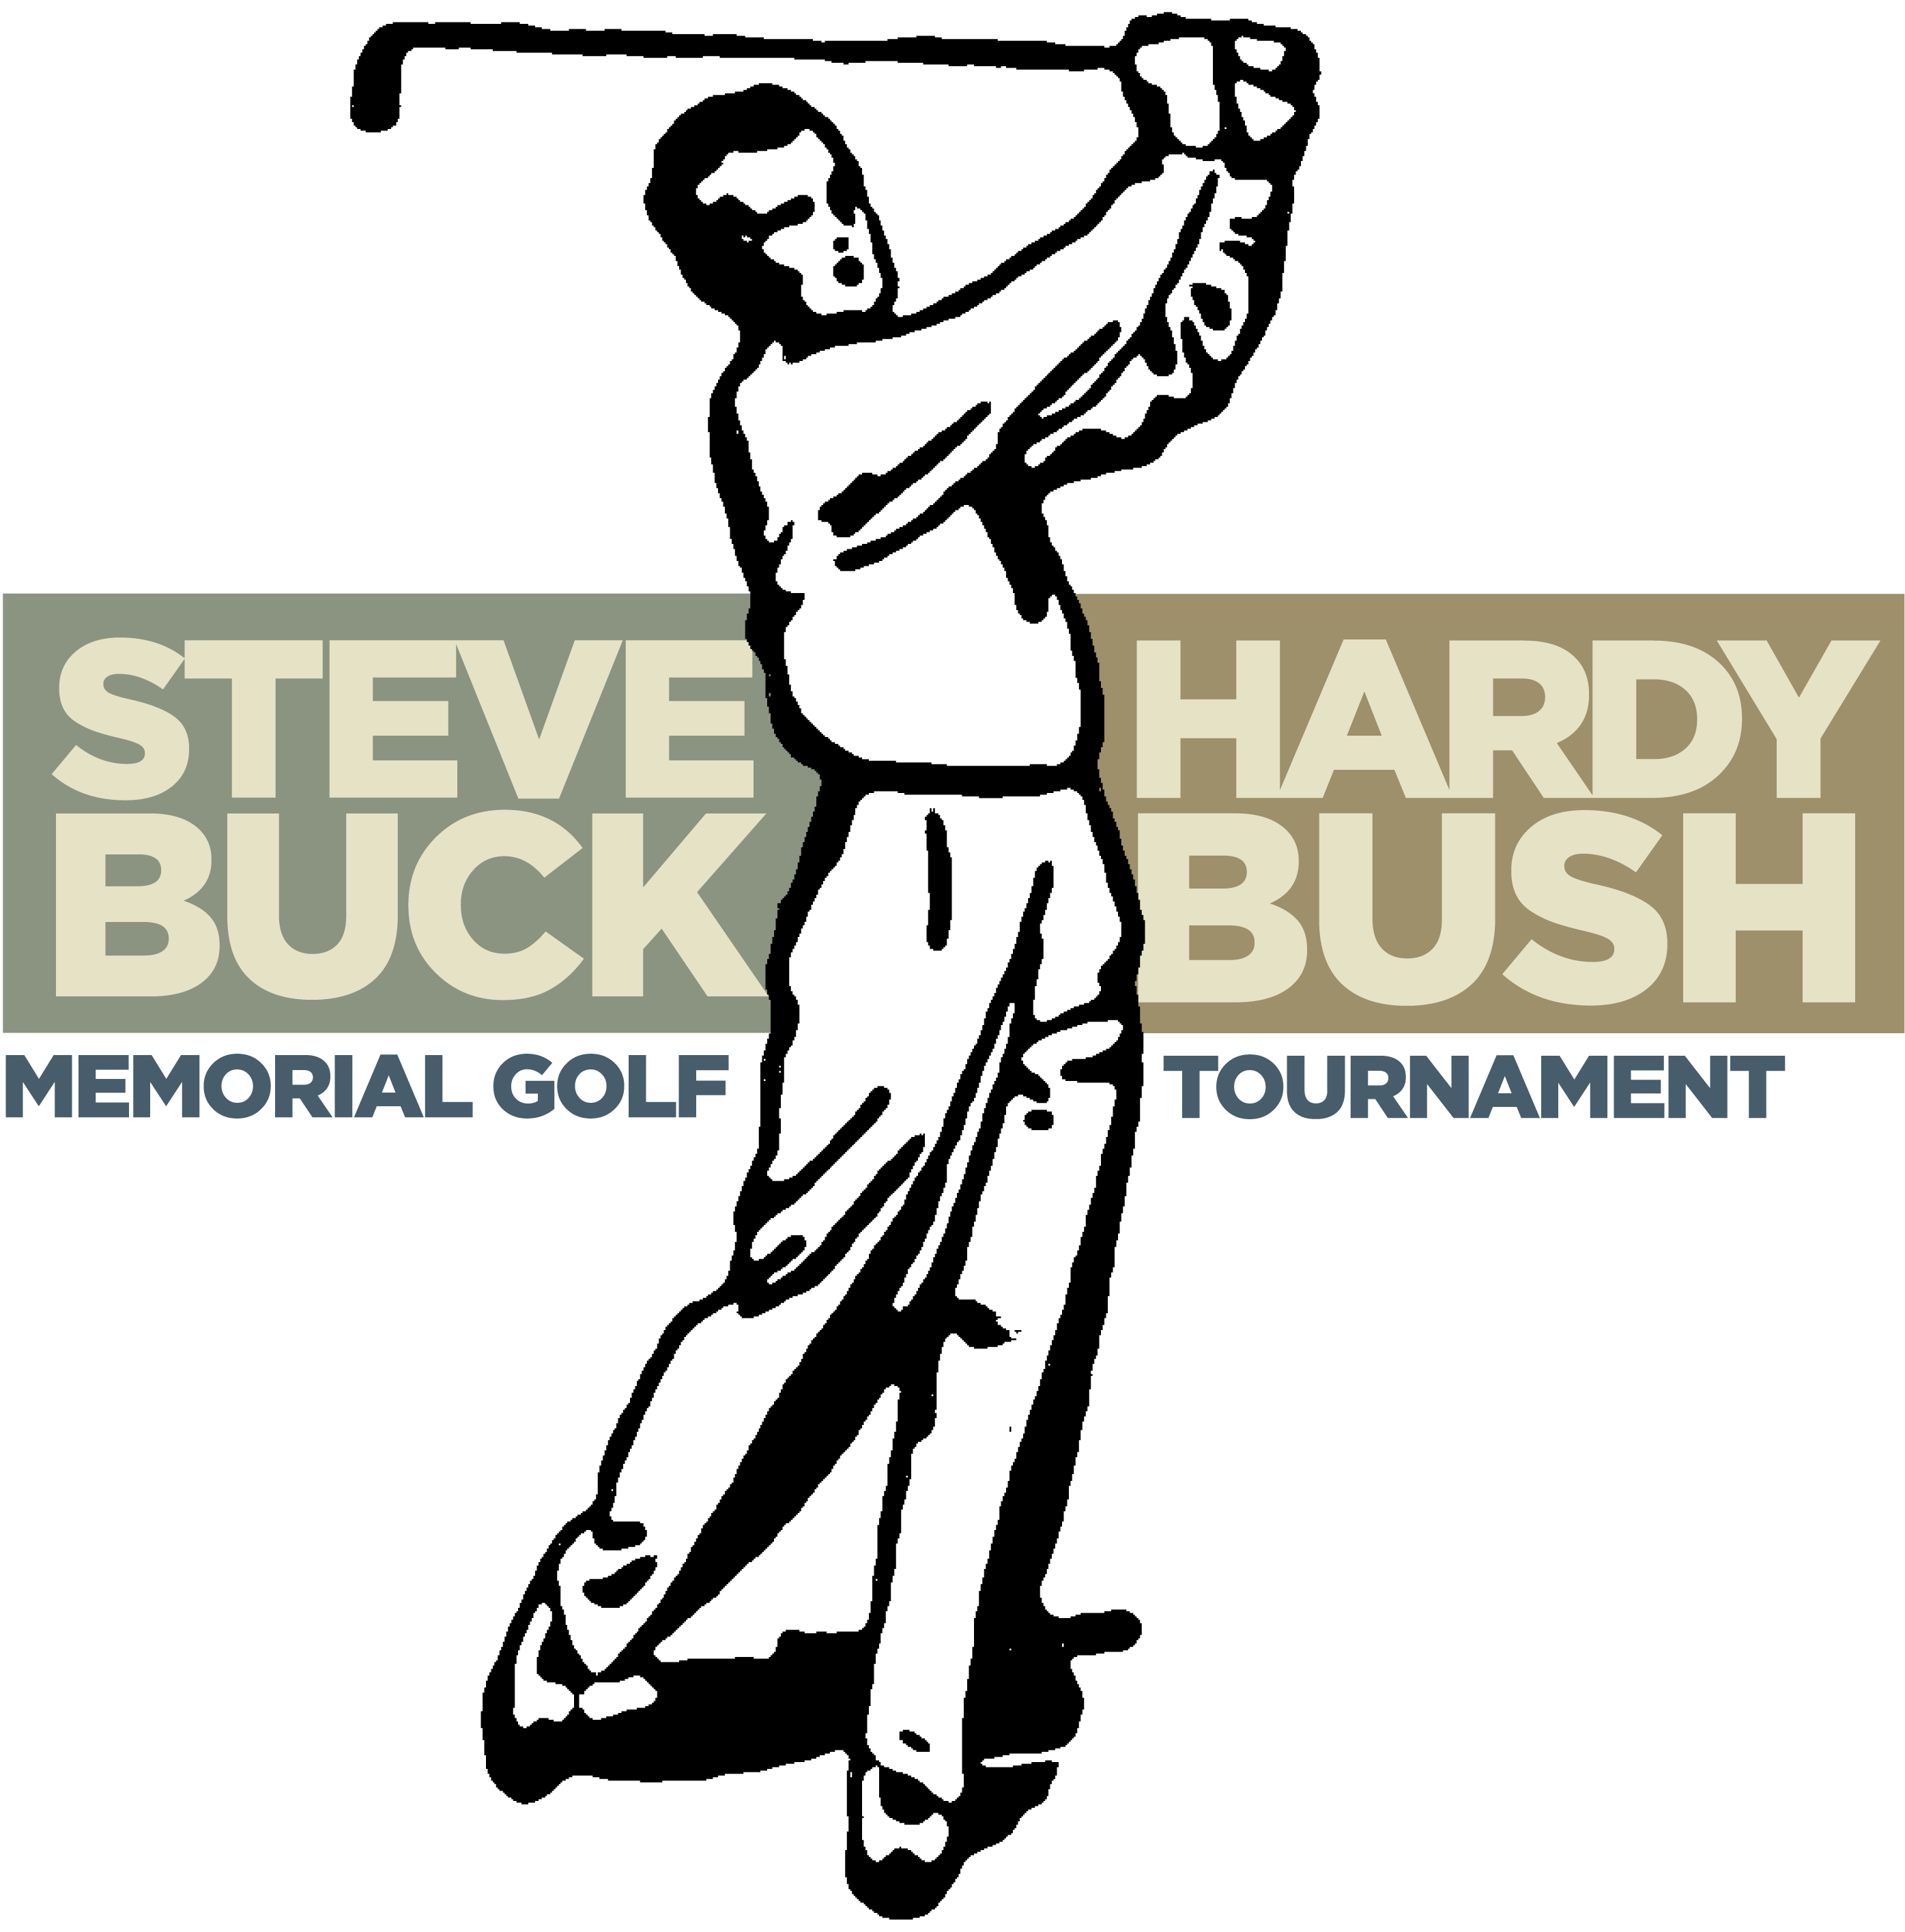 Steve Buck/Hardy Bush Memorial Golf Tournament logo 3